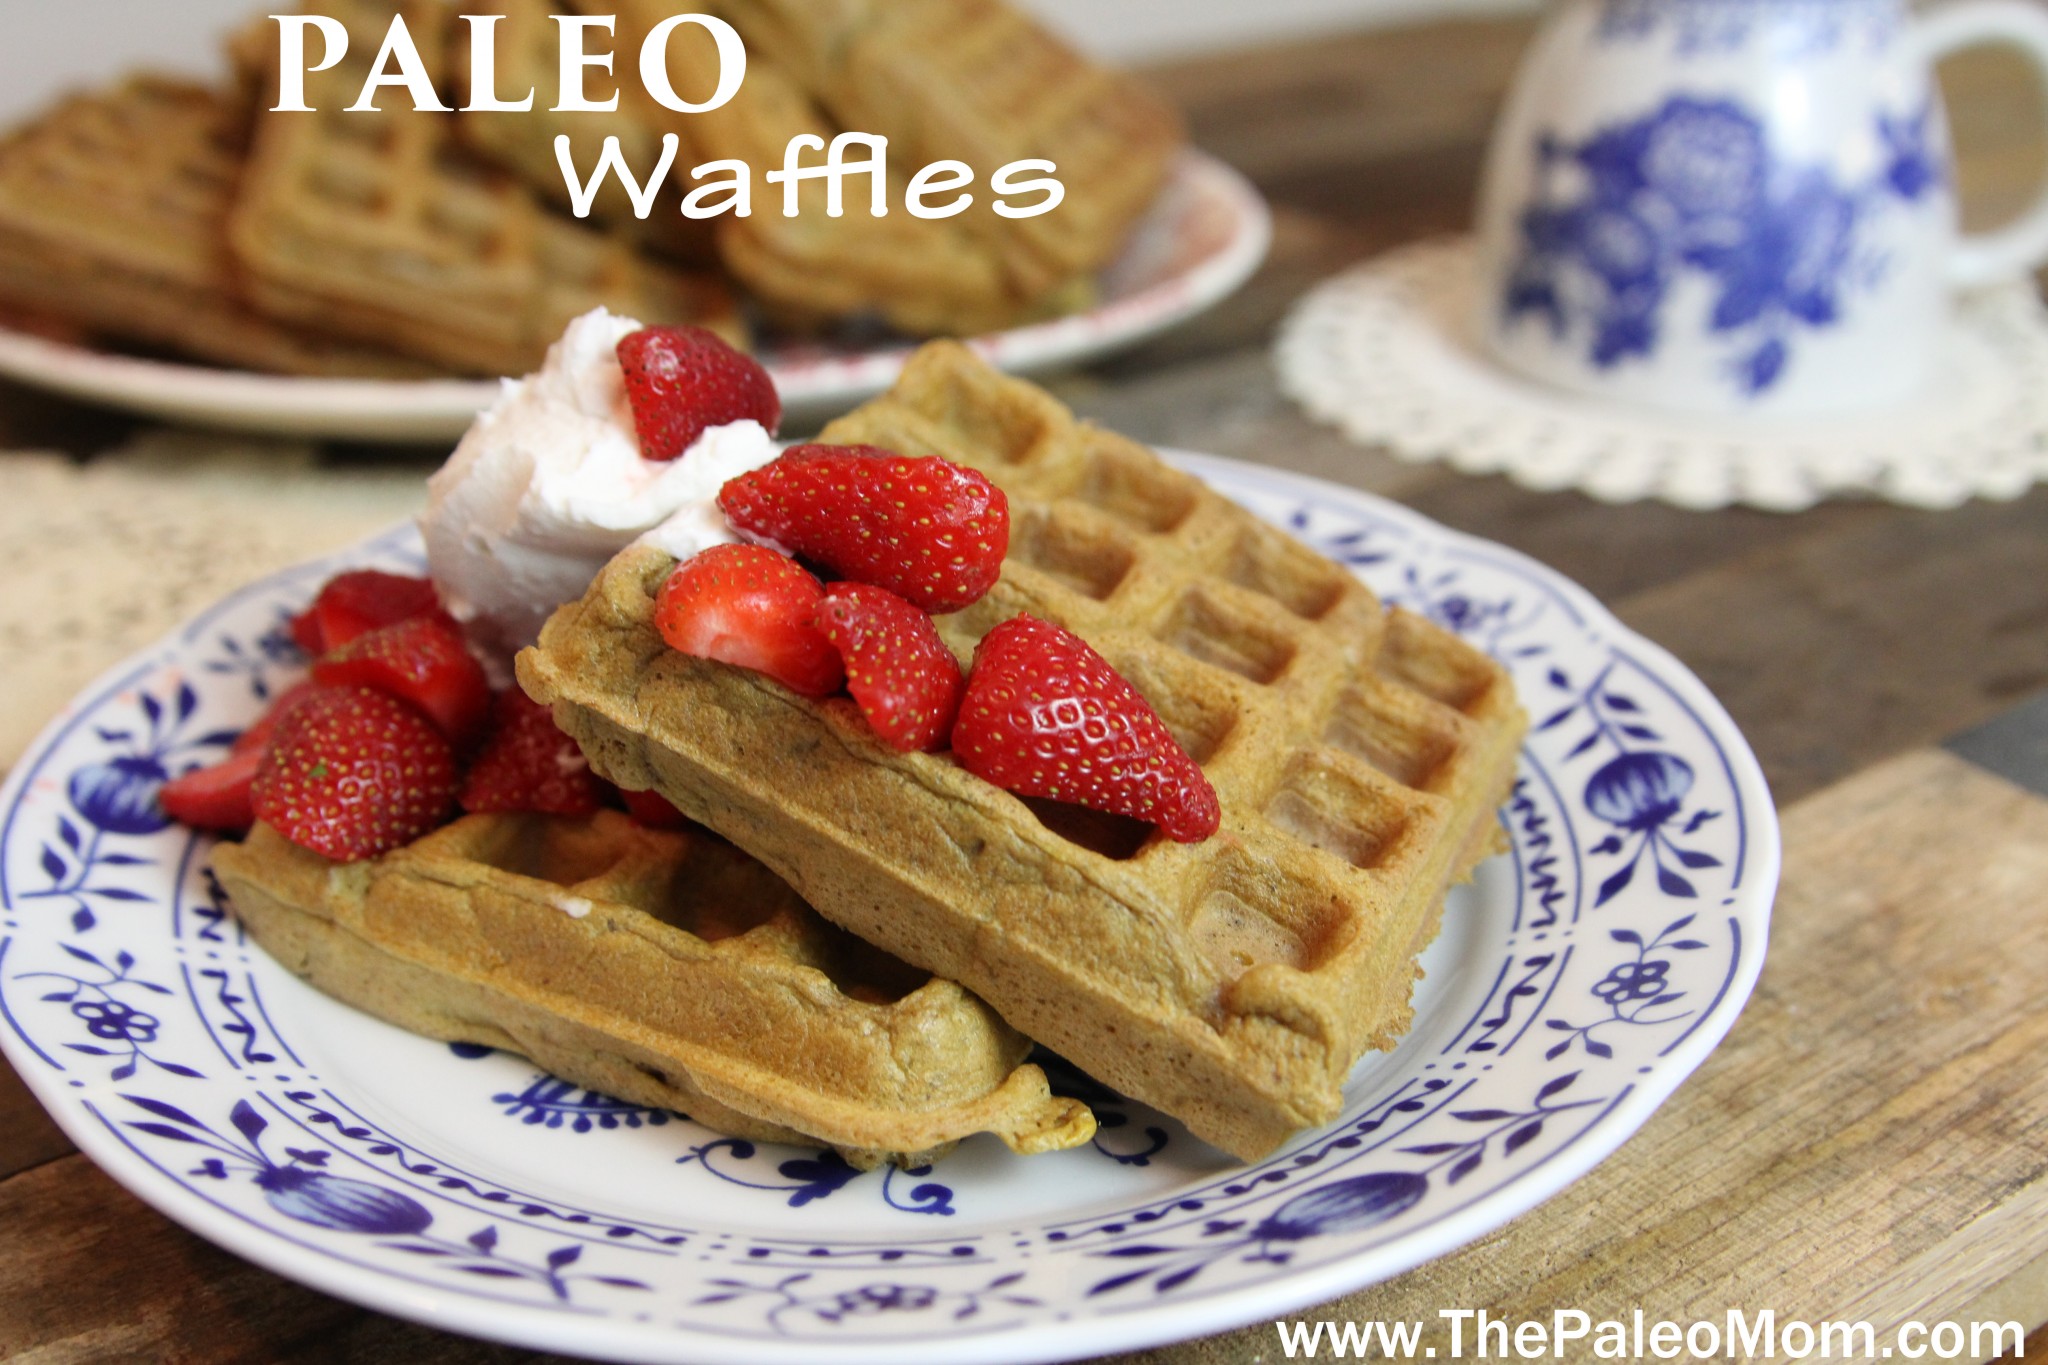 Paleo Waffles